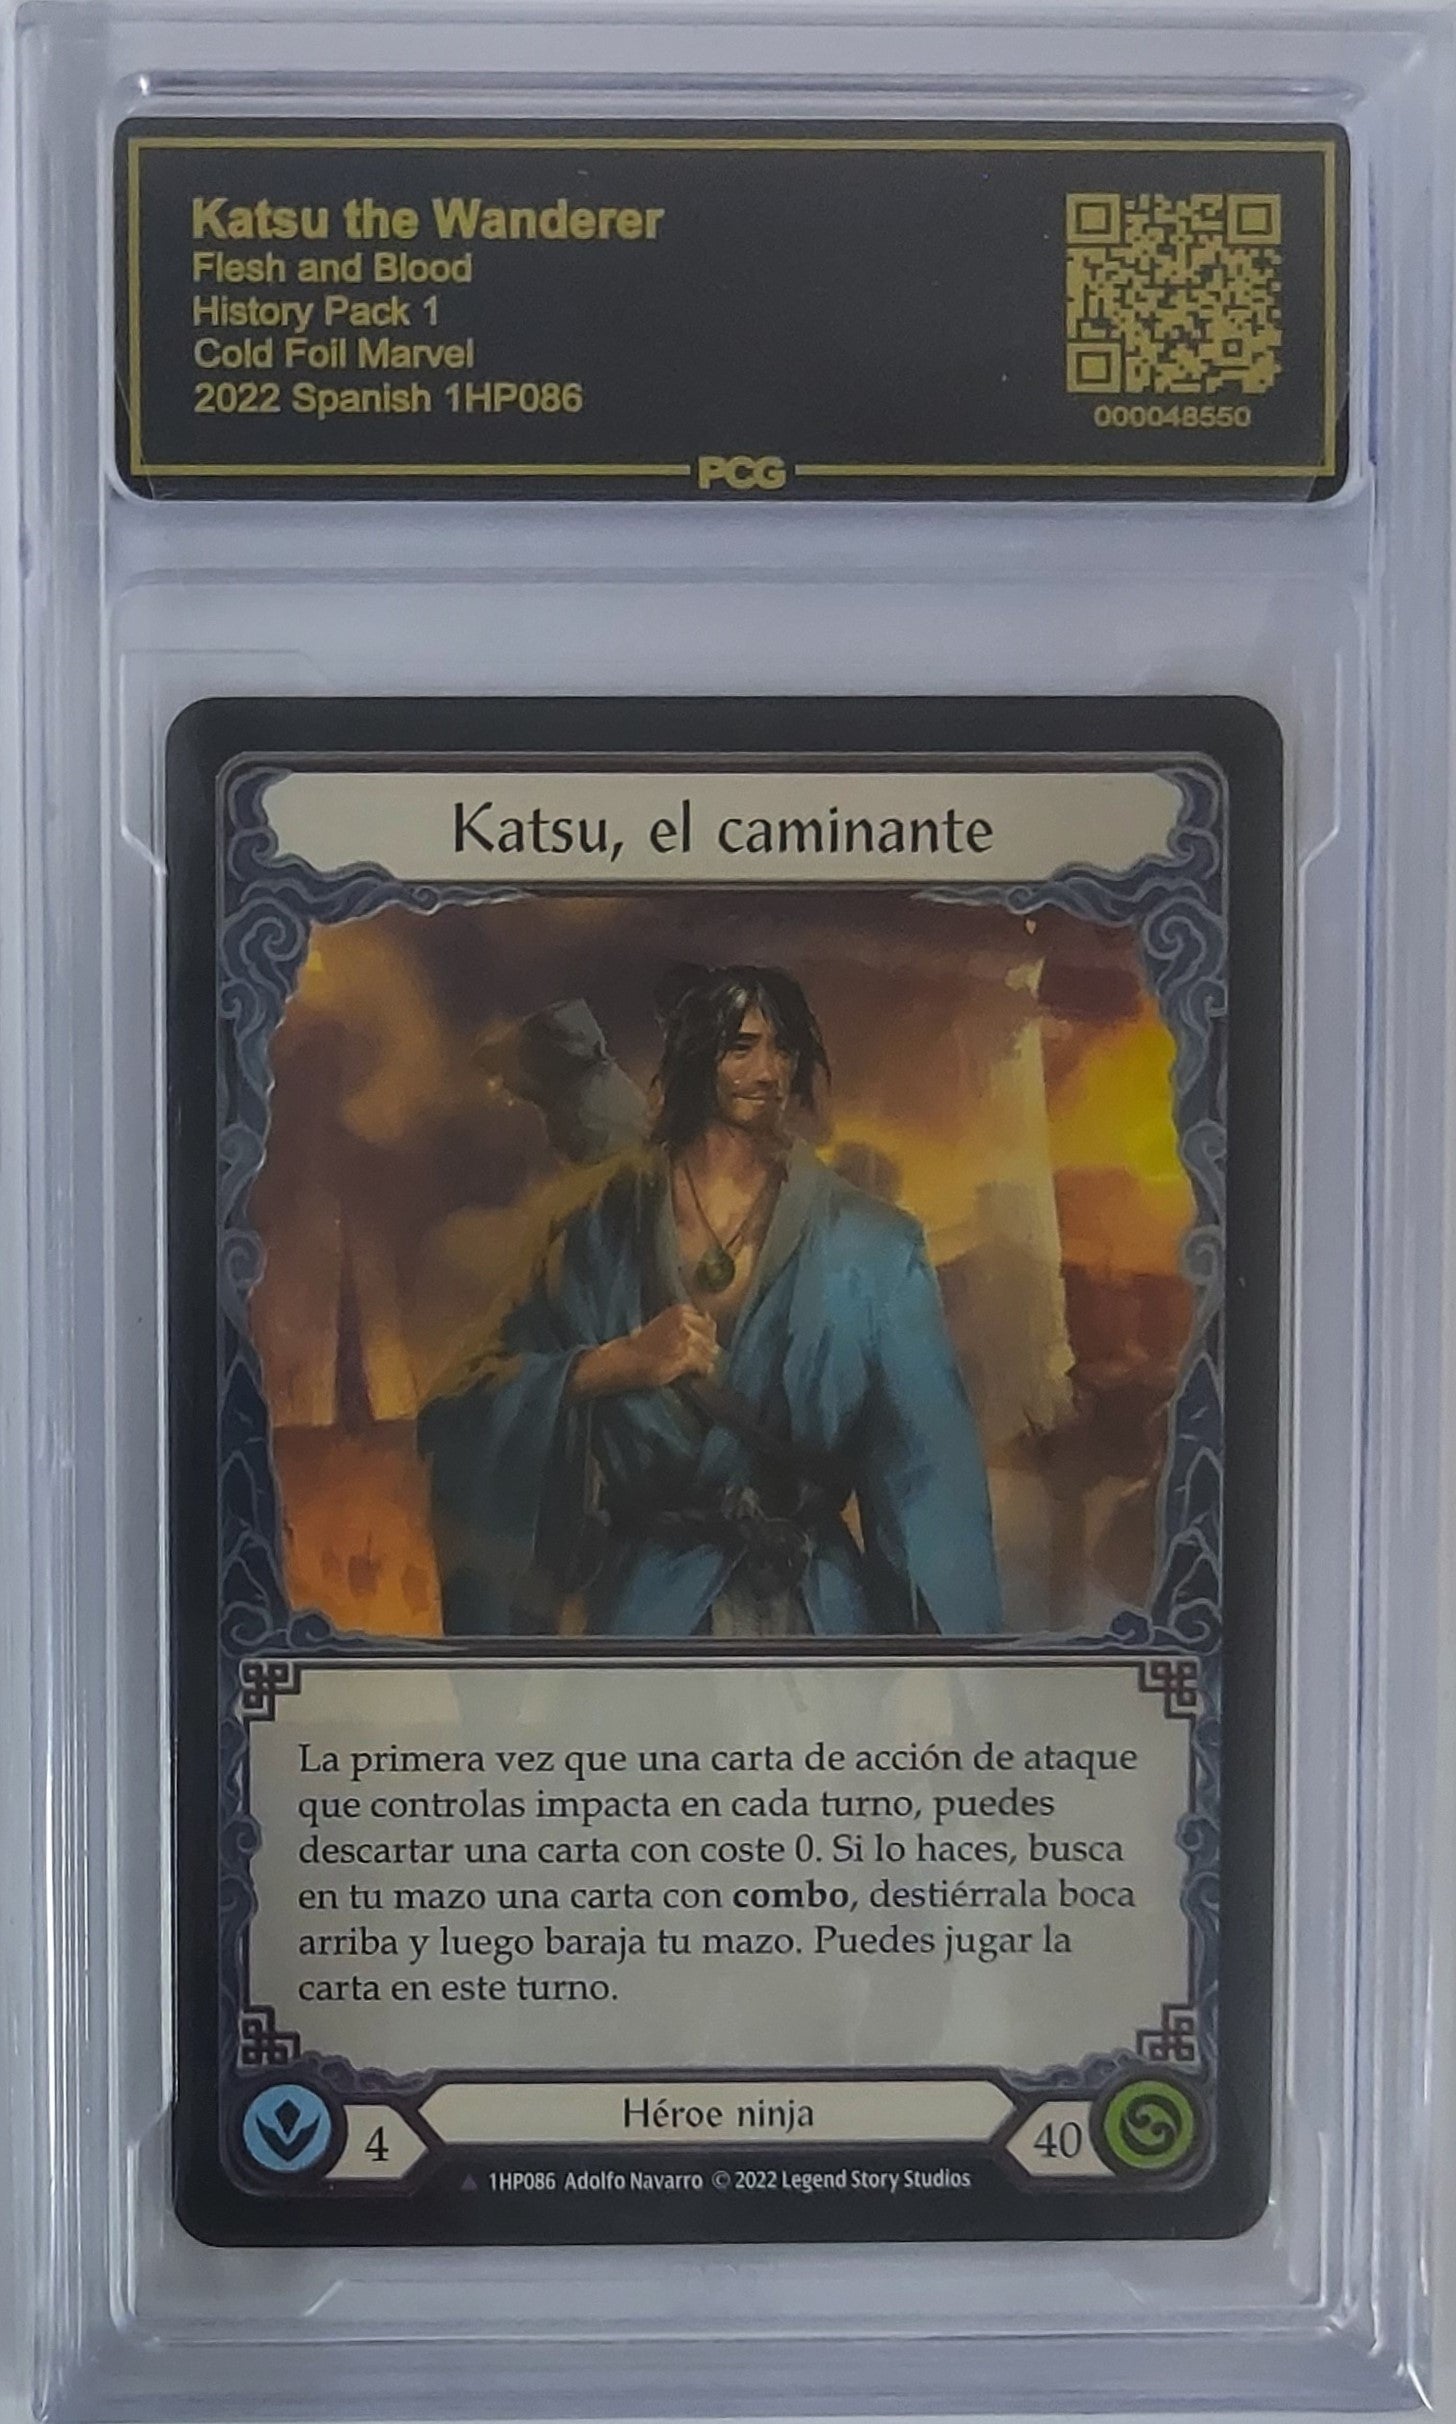 [PCG 9.5] [Marvel] Katsu the Wanderer (Spanish) - 1HP086